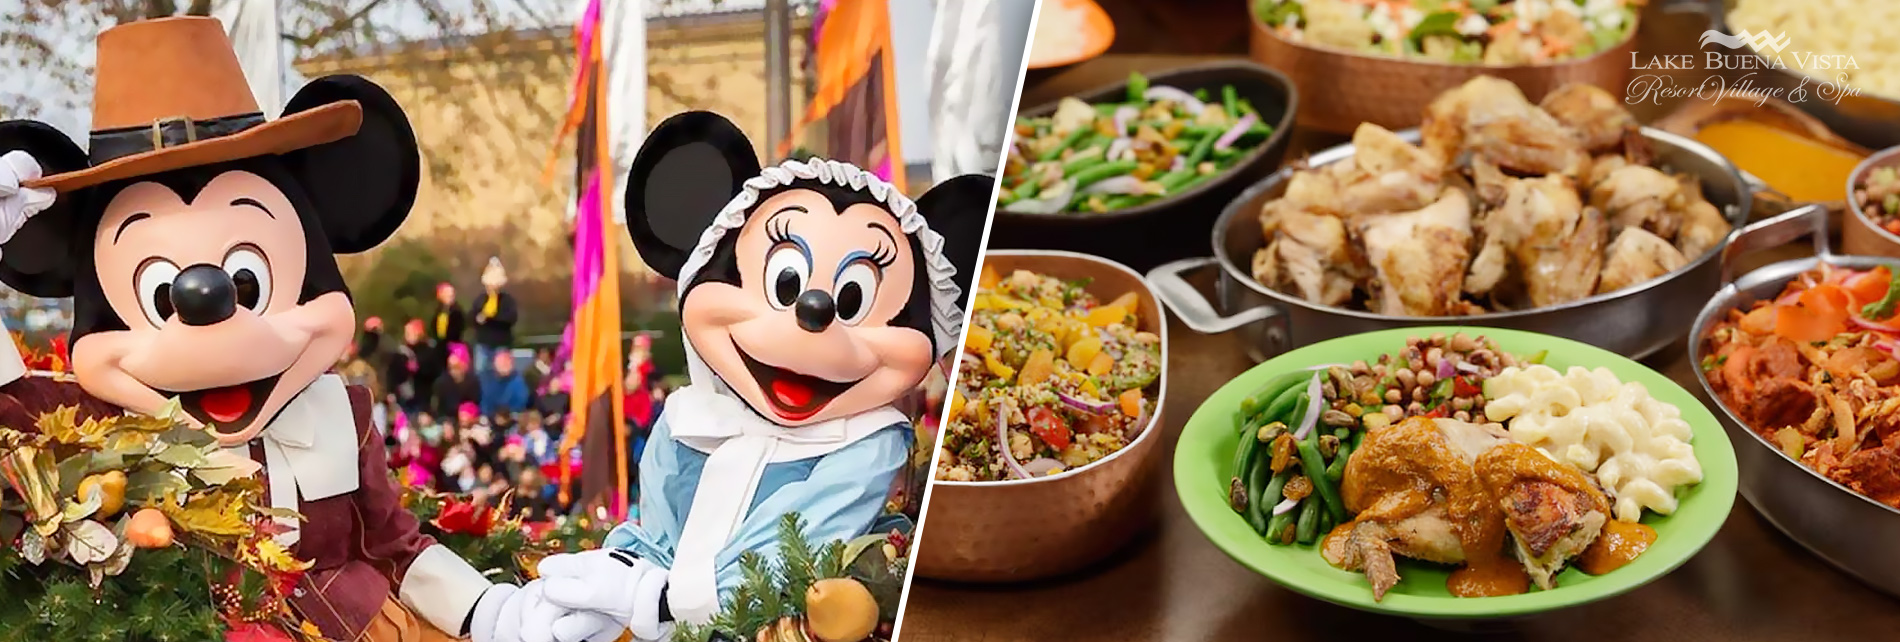 Thanksgiving At Walt Disney World By Lake Buena Vista Resort Village And Spa